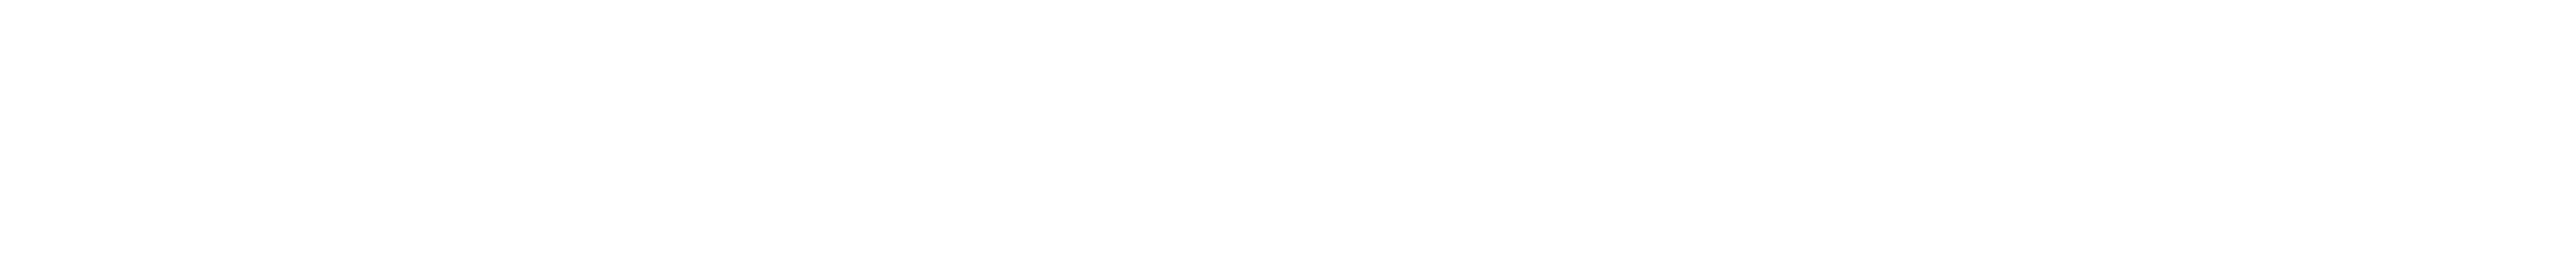 BKFCVERZ Logo - White